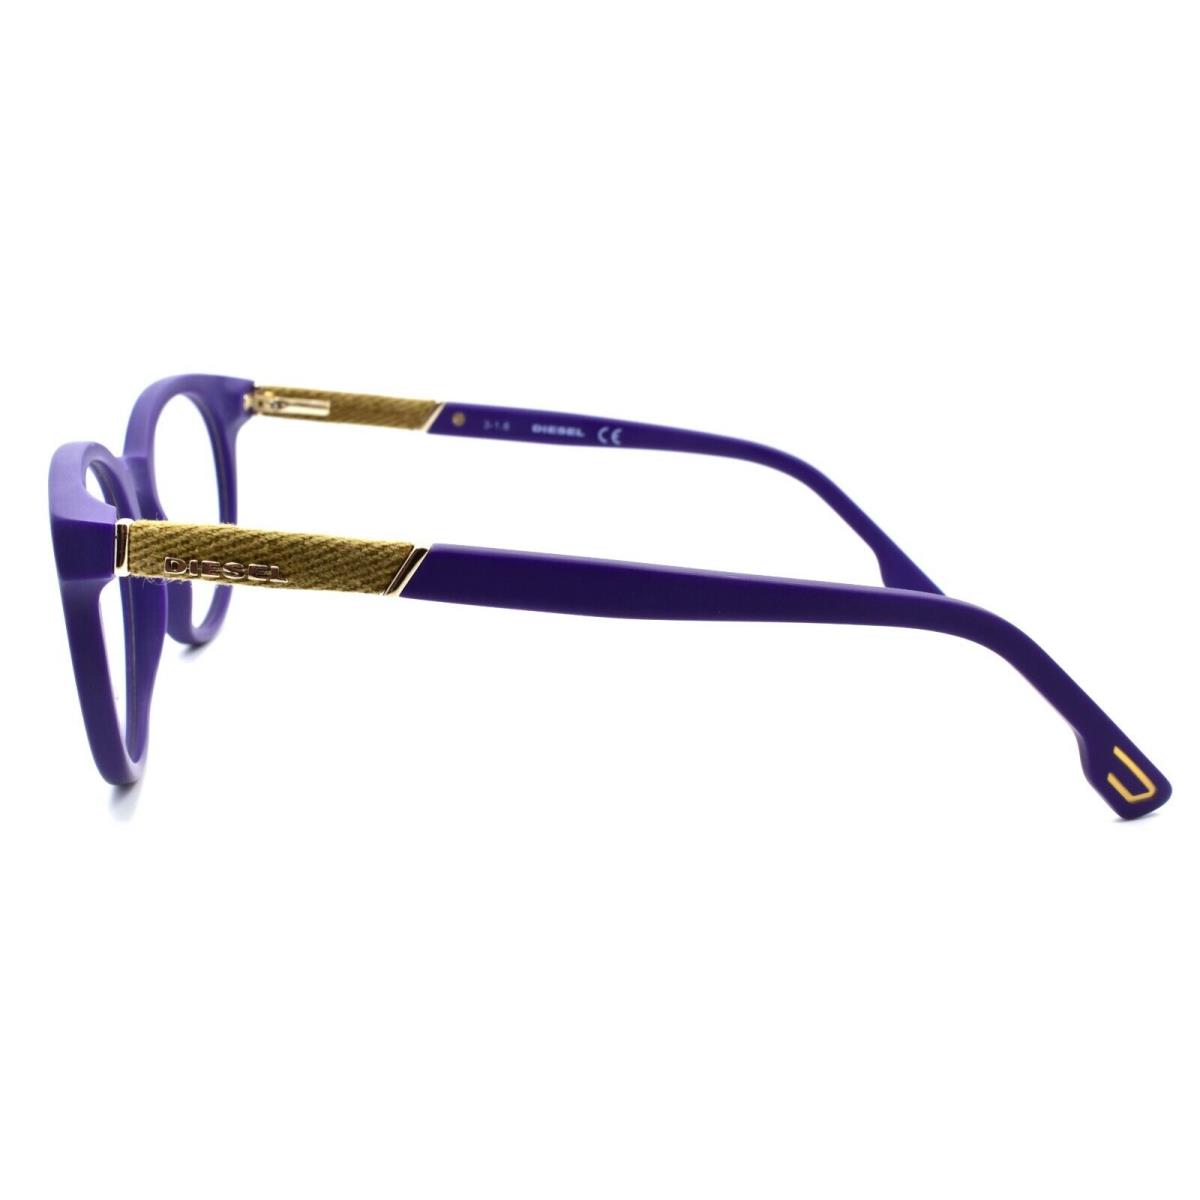 Diesel eyeglasses  - Violet Frame 1